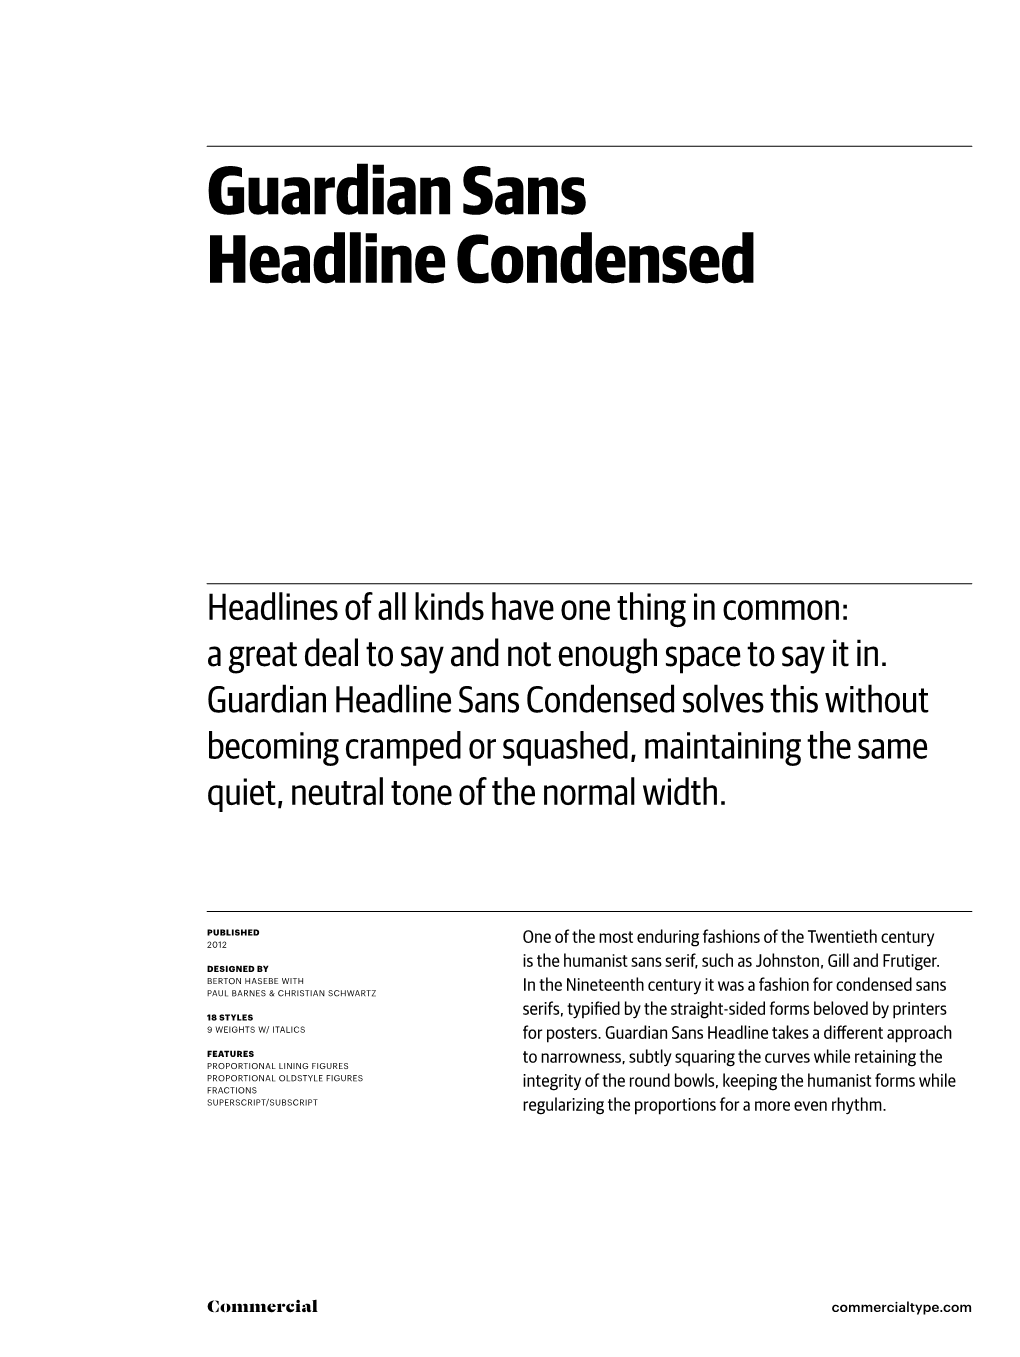 Guardian Sans Headline Condensed